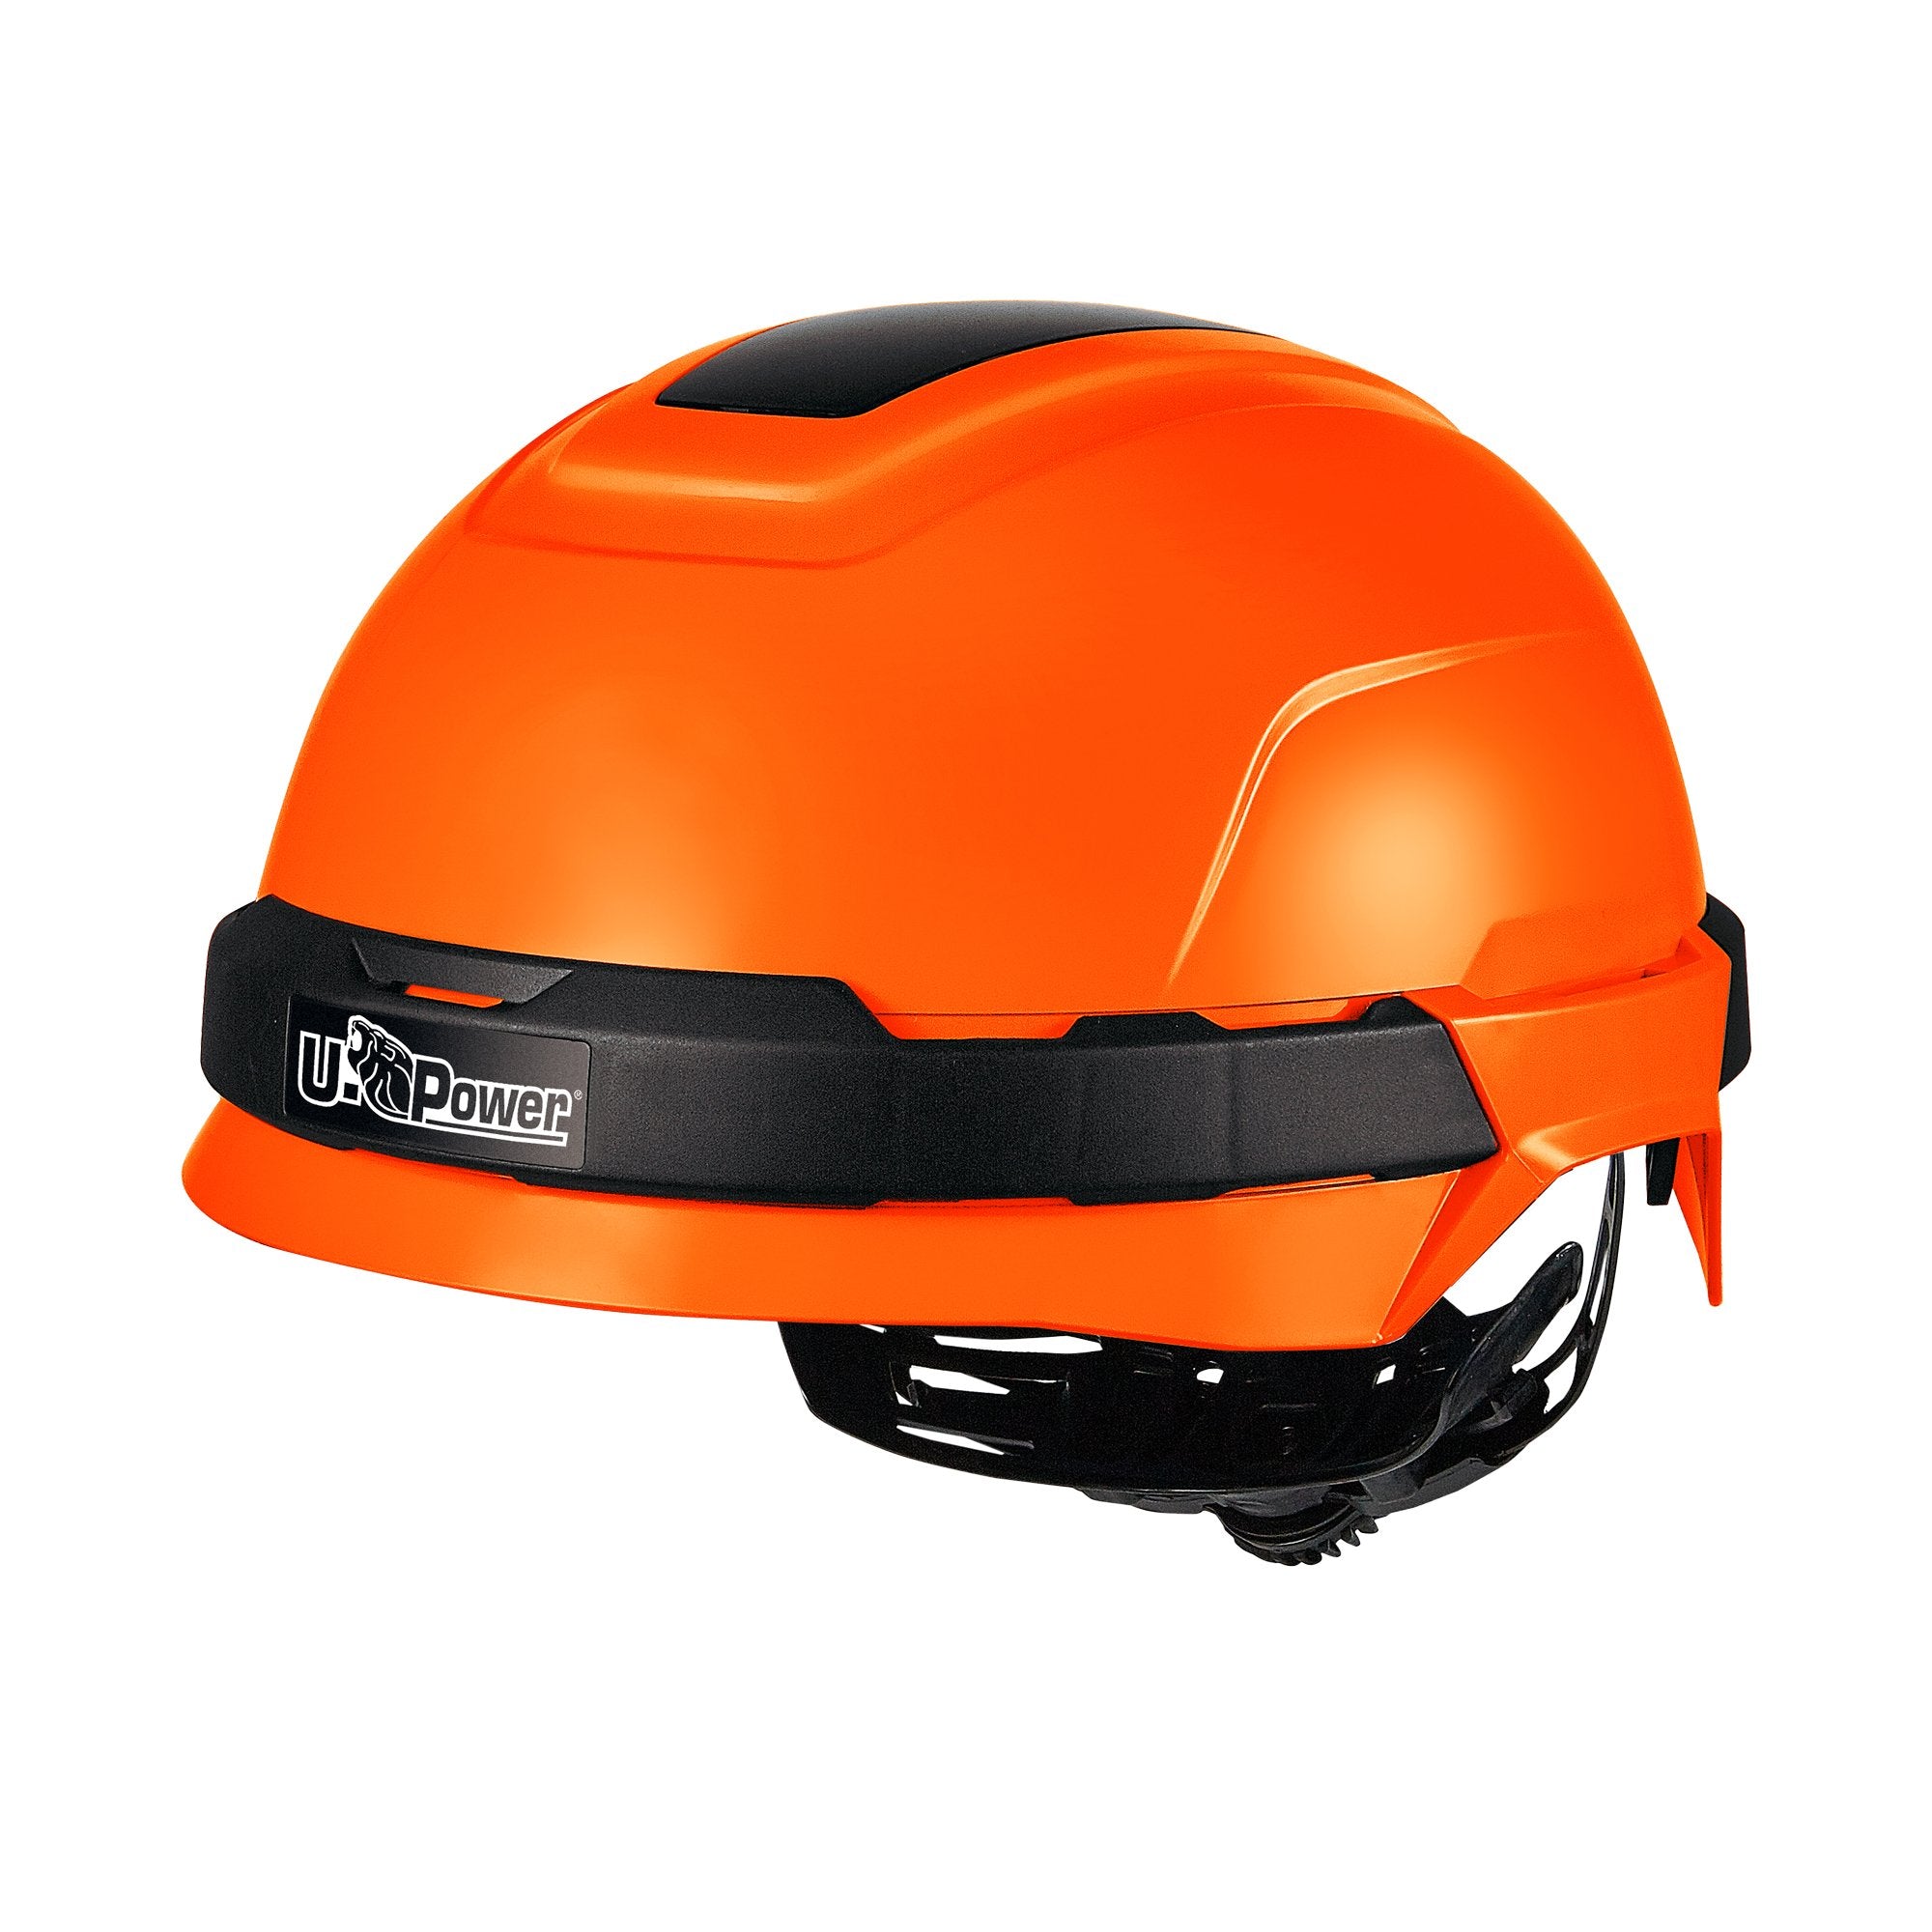 u-power-casco-protettivo-antares-arancione-fluo-regolabile